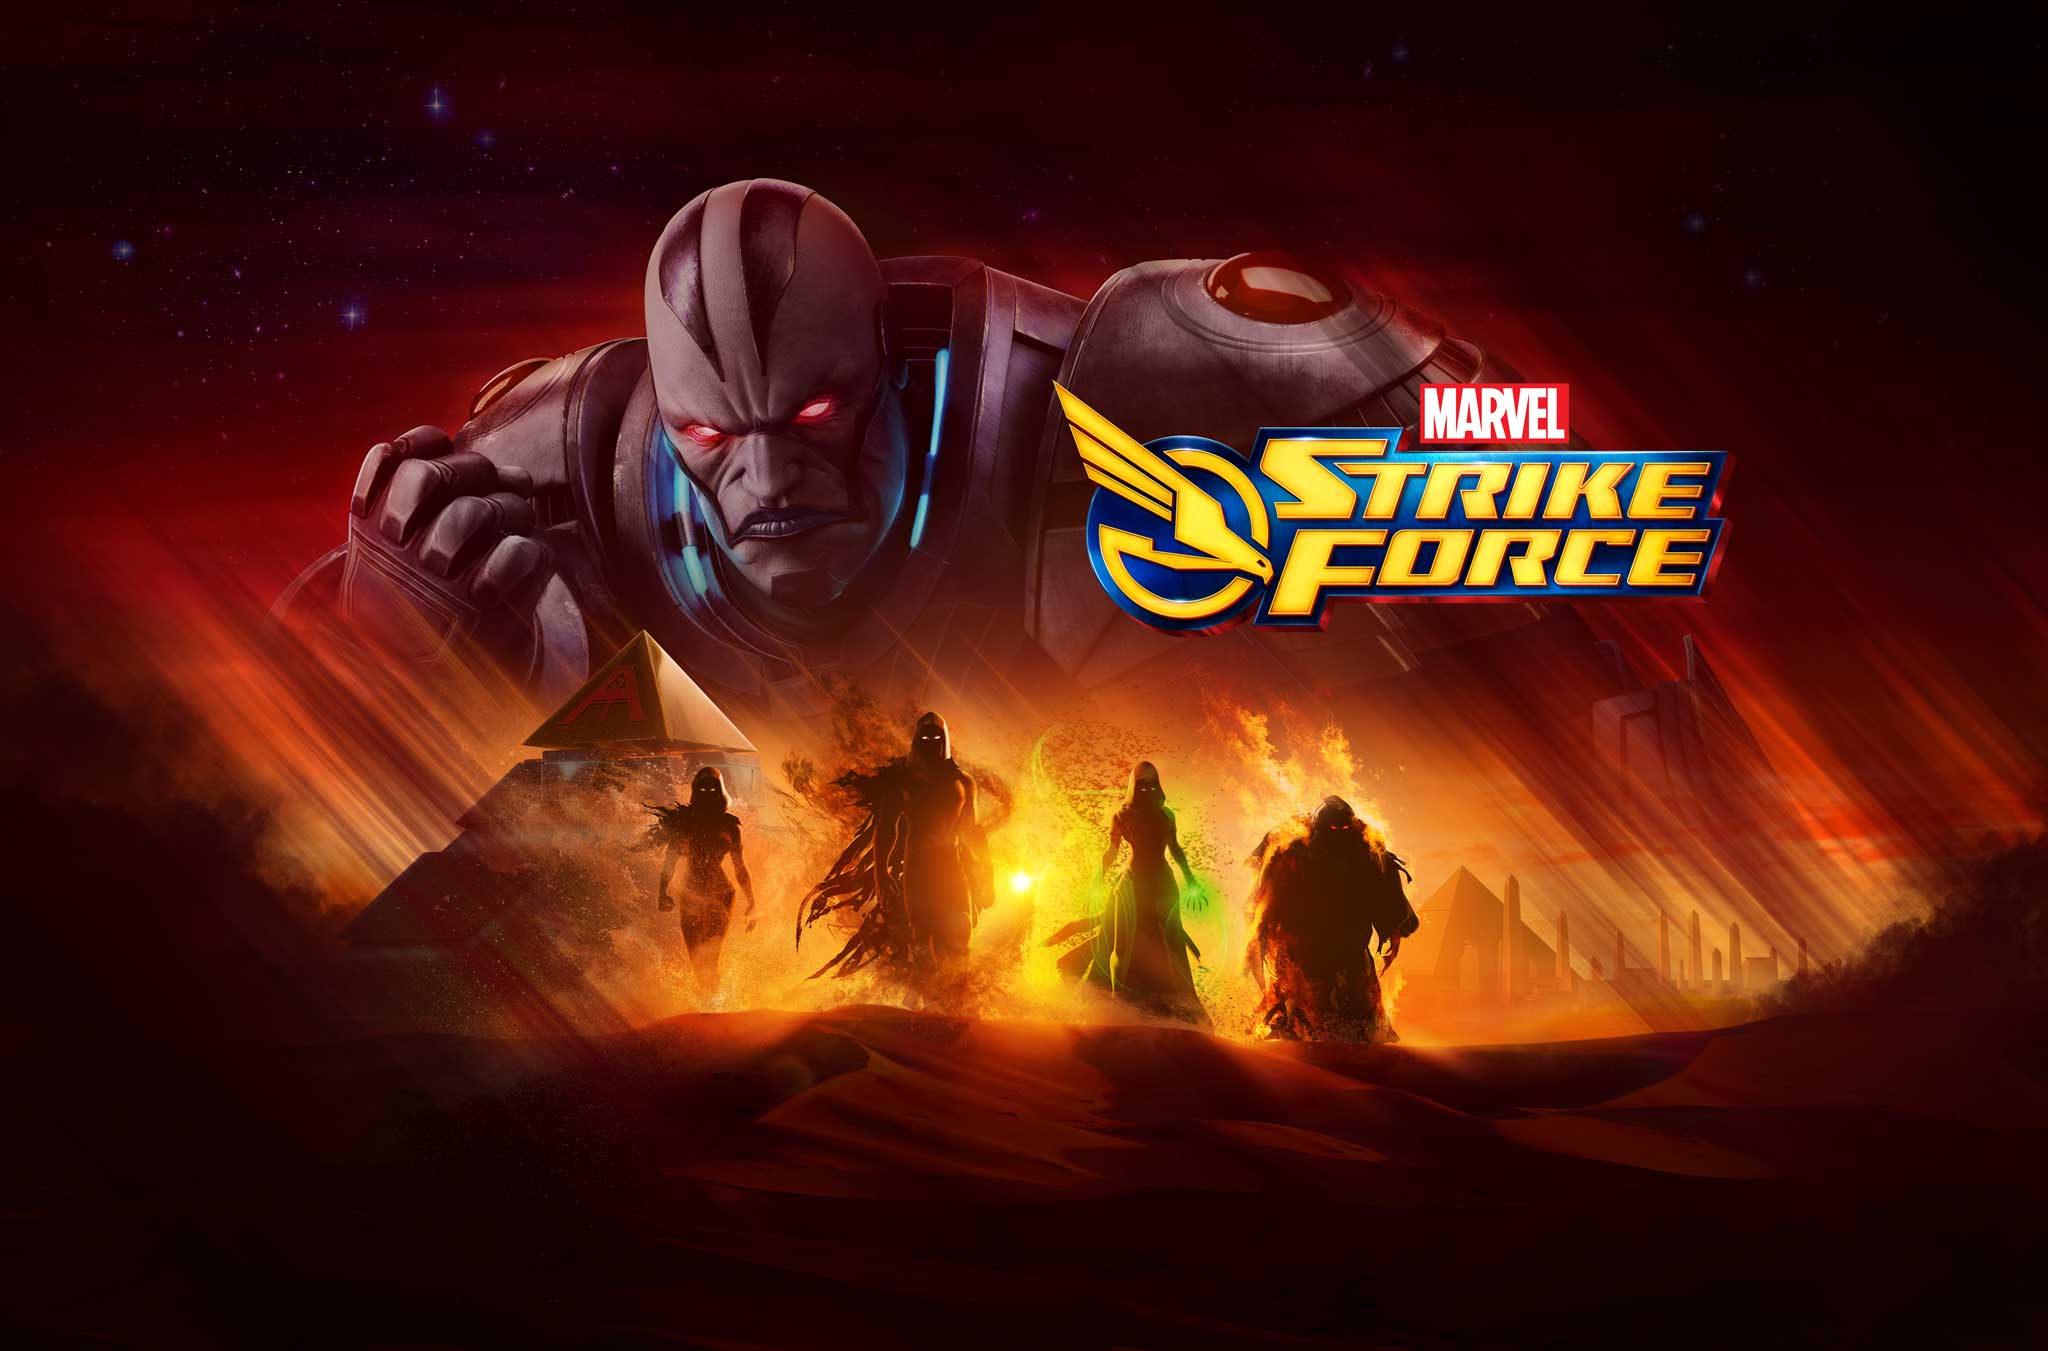 Marvel Strike Force - X-Men screenshots only.